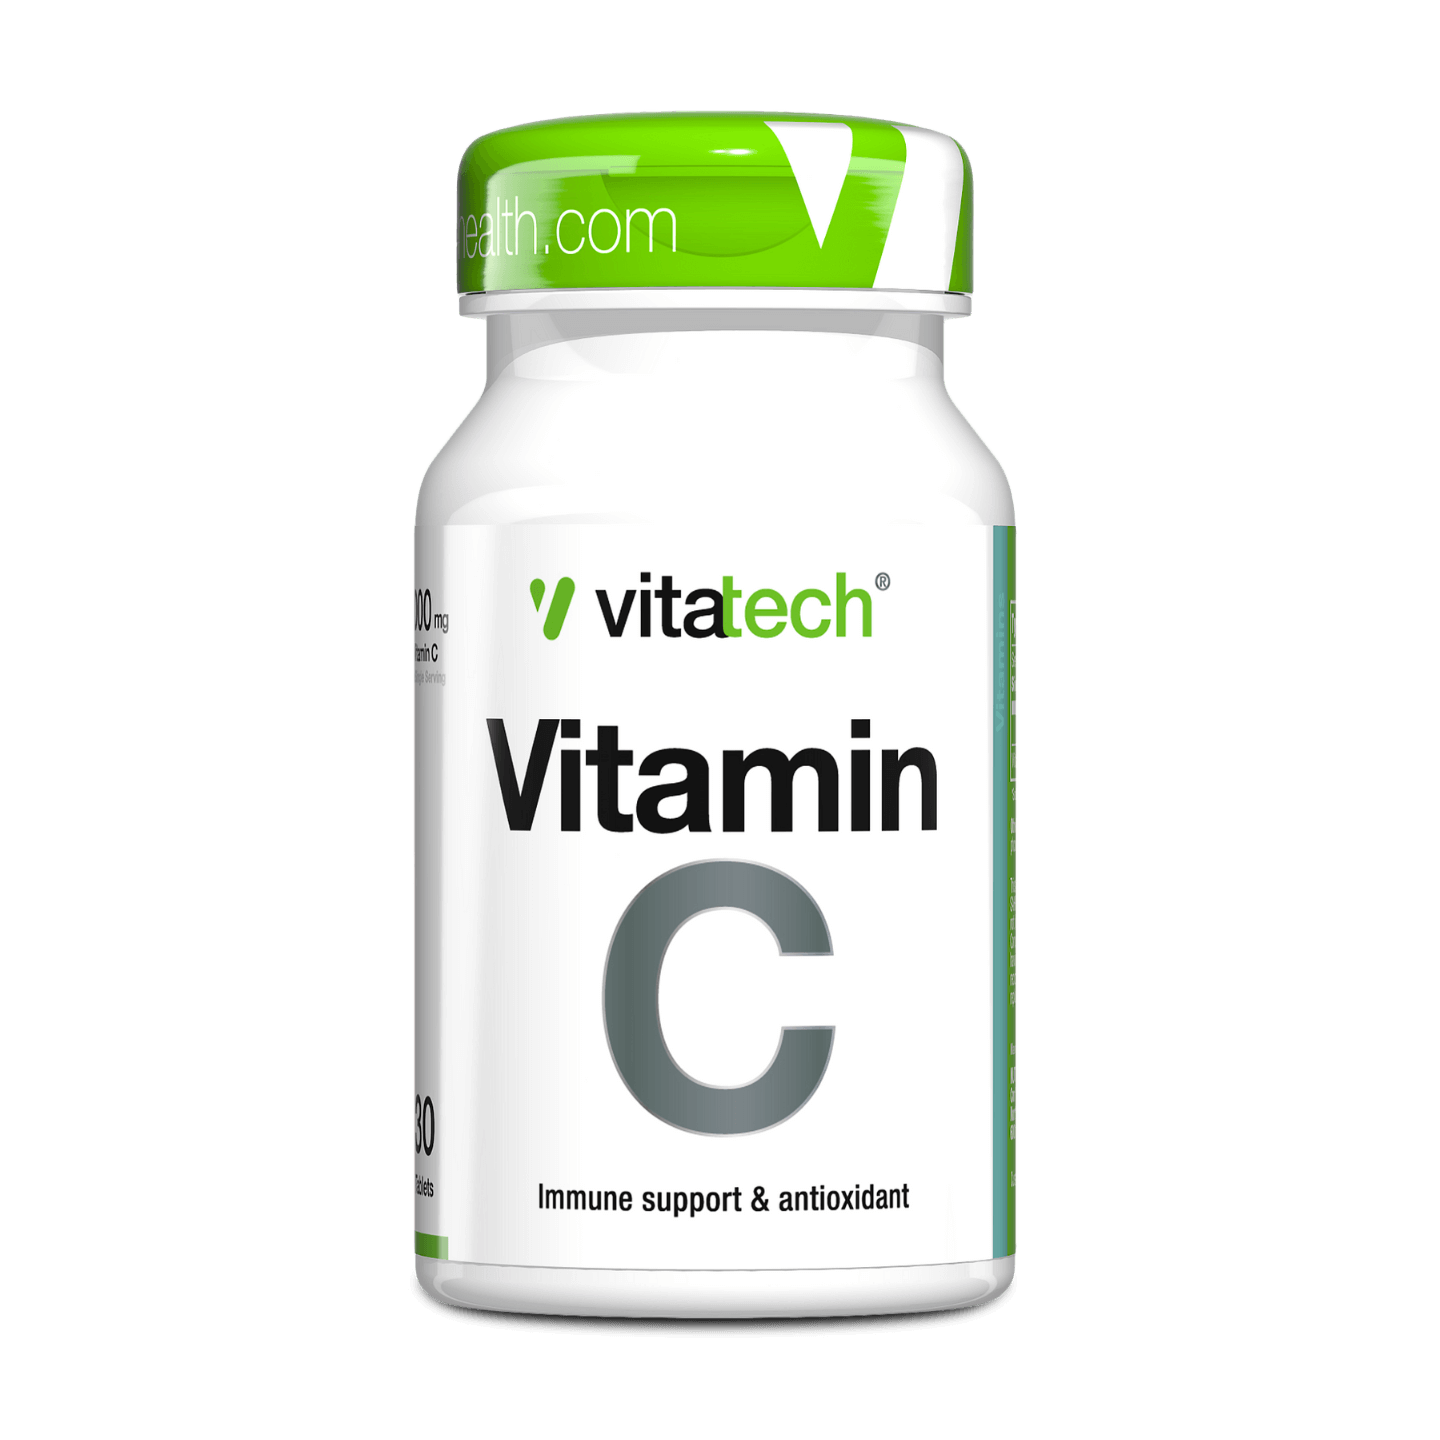 vitatech vitamin c